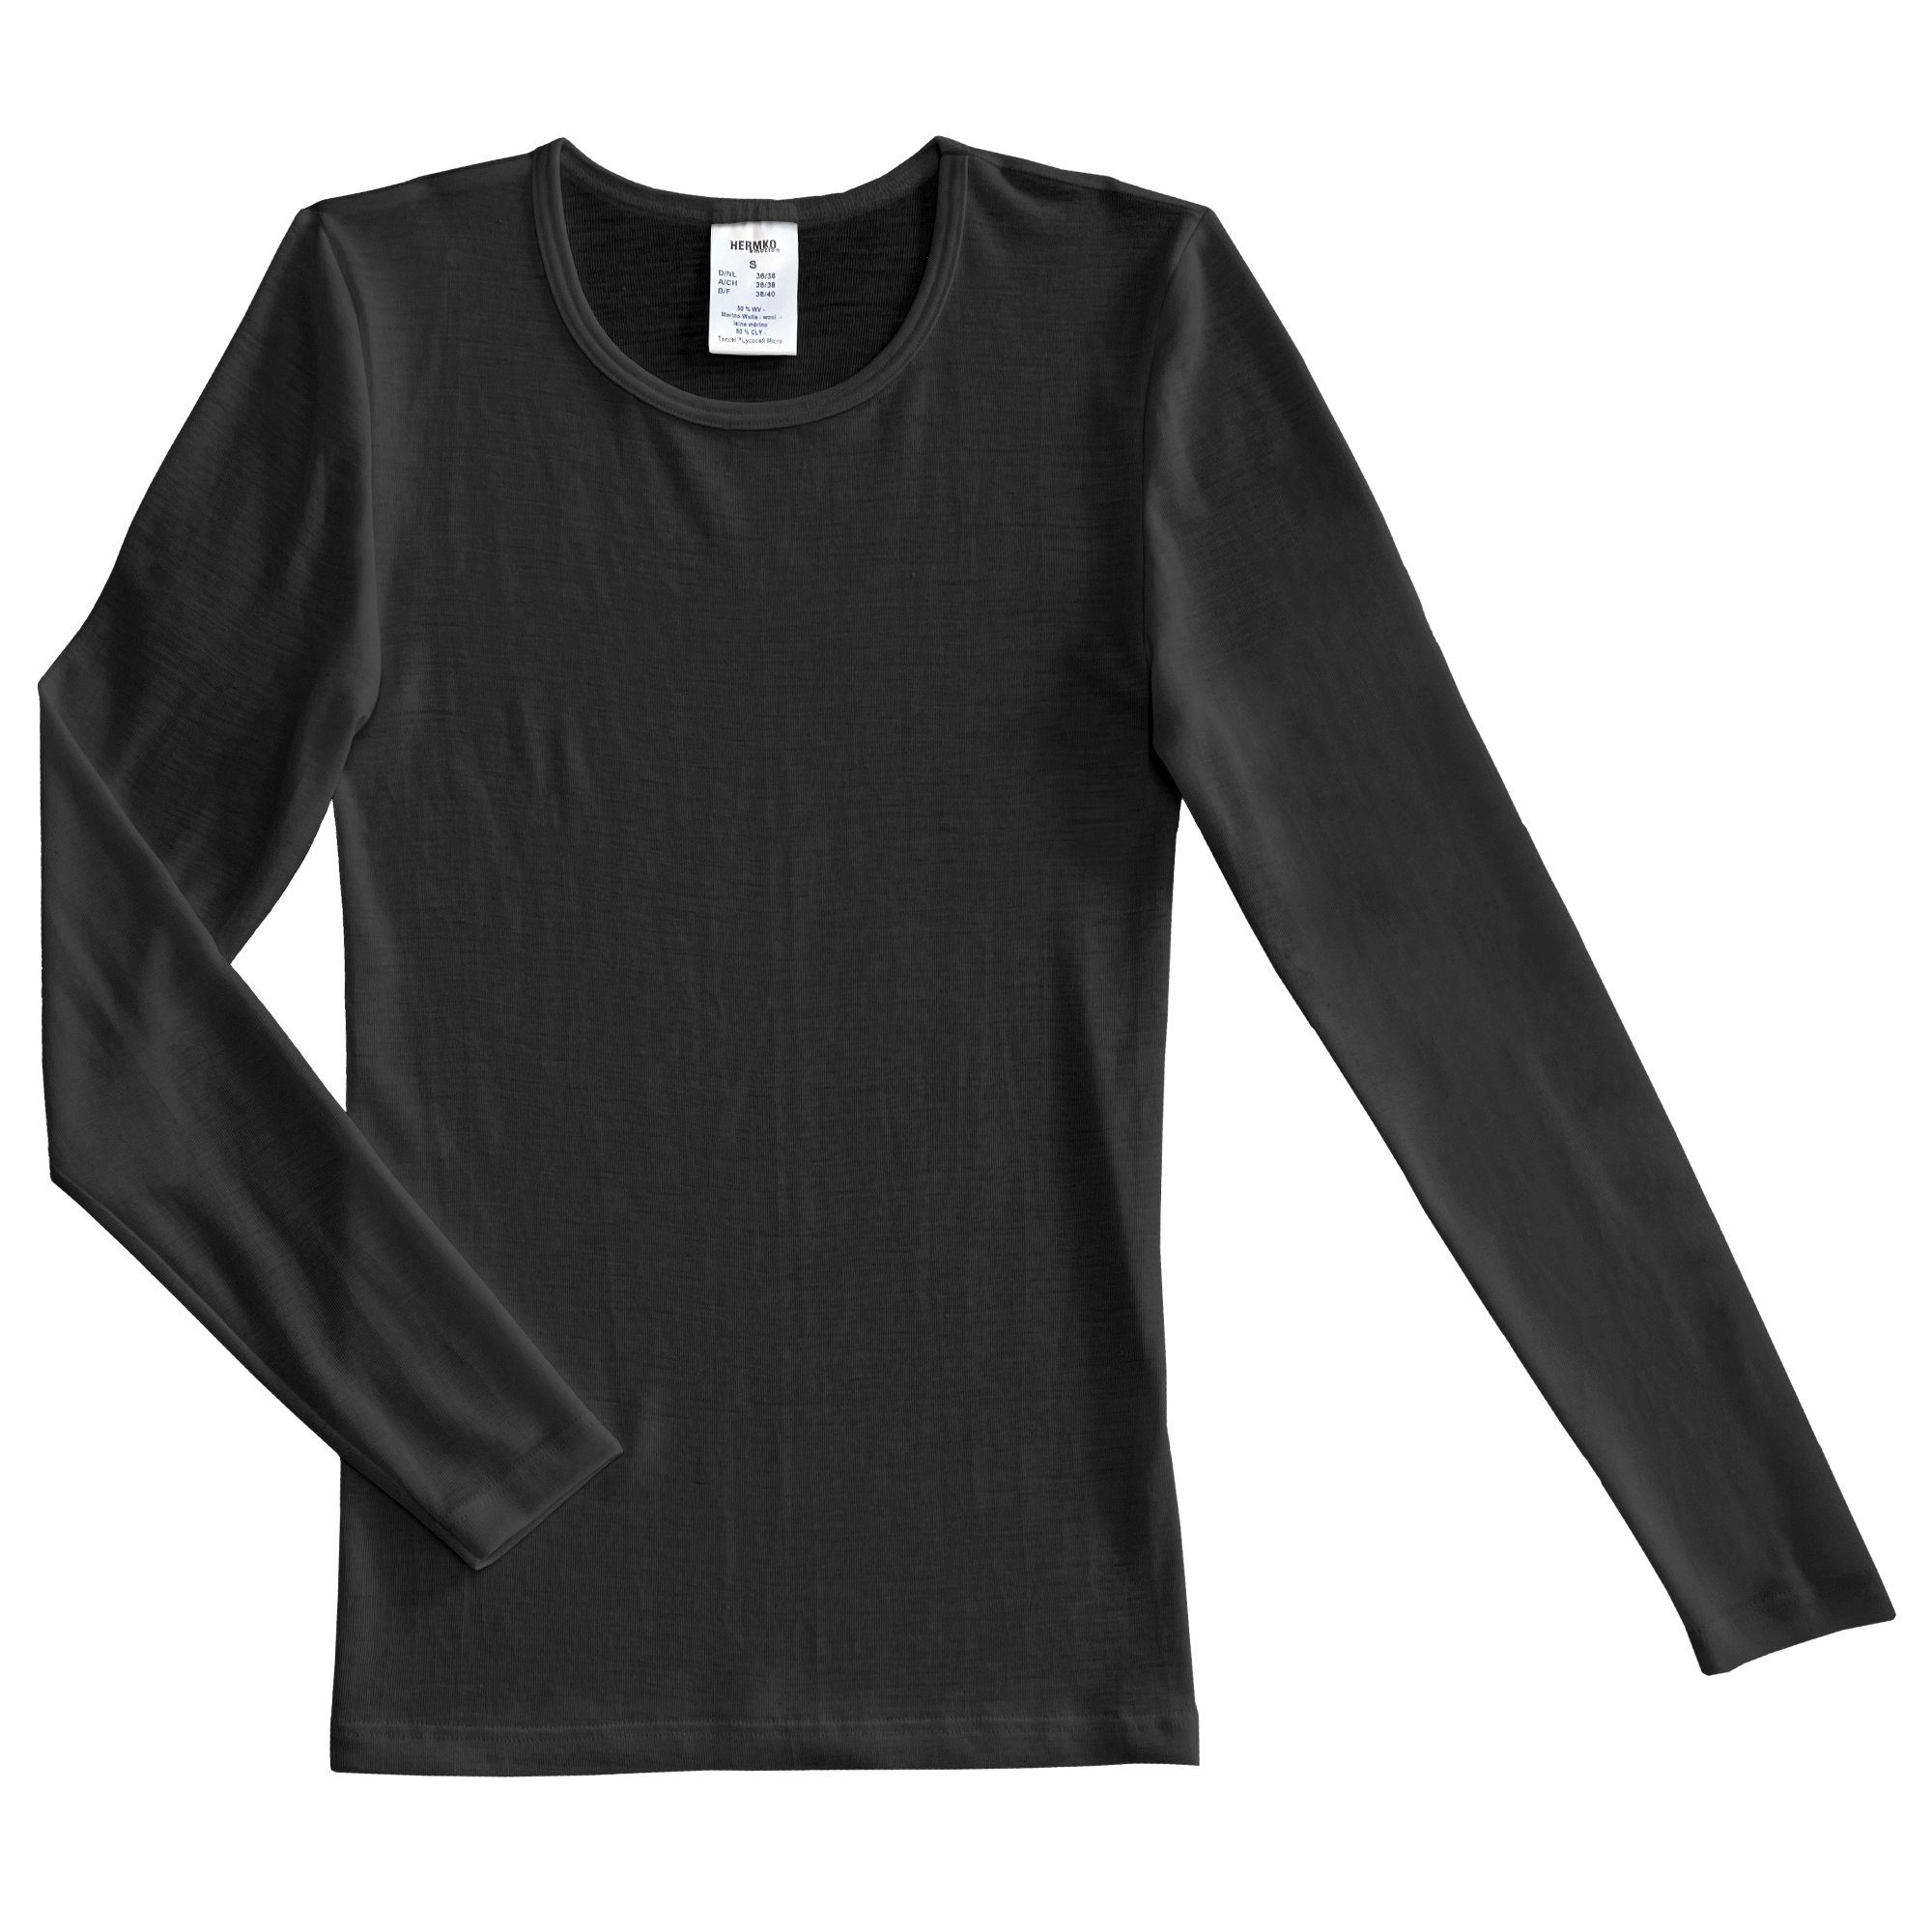 40830 aus schwarz Wolle Tencel langarm Unterziehshirt / Damen HERMKO Shirt